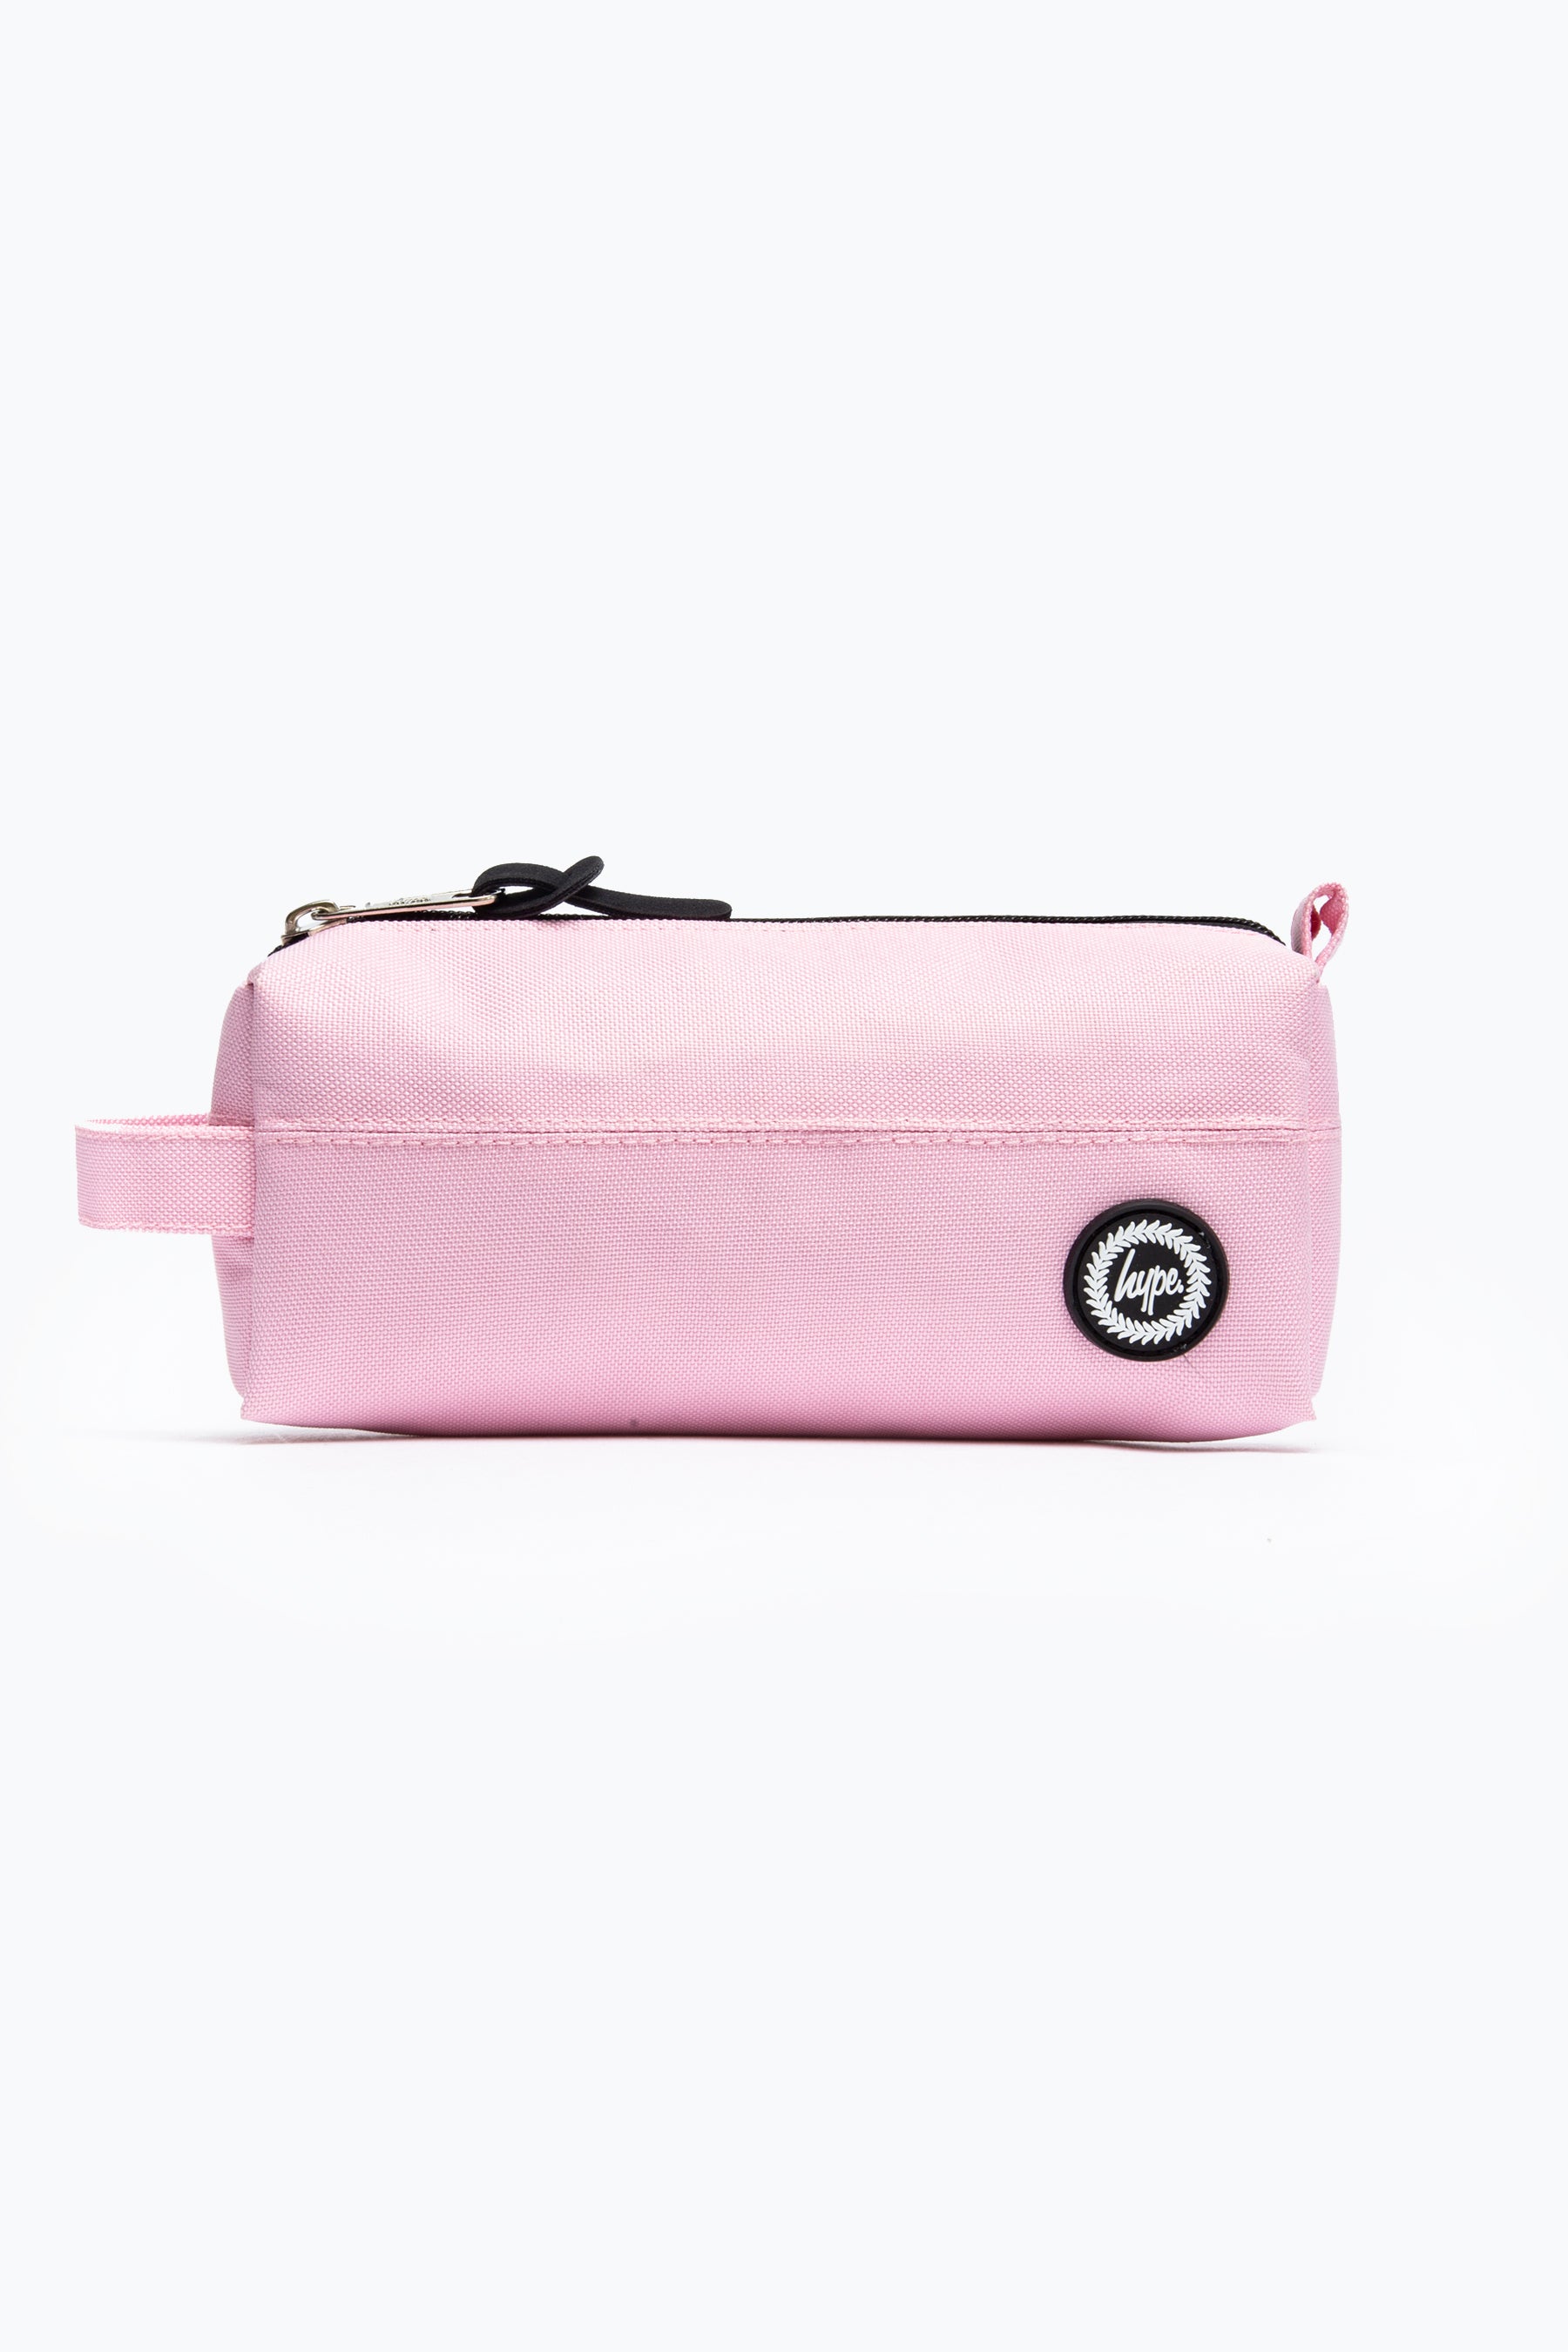 hype pink pencil case